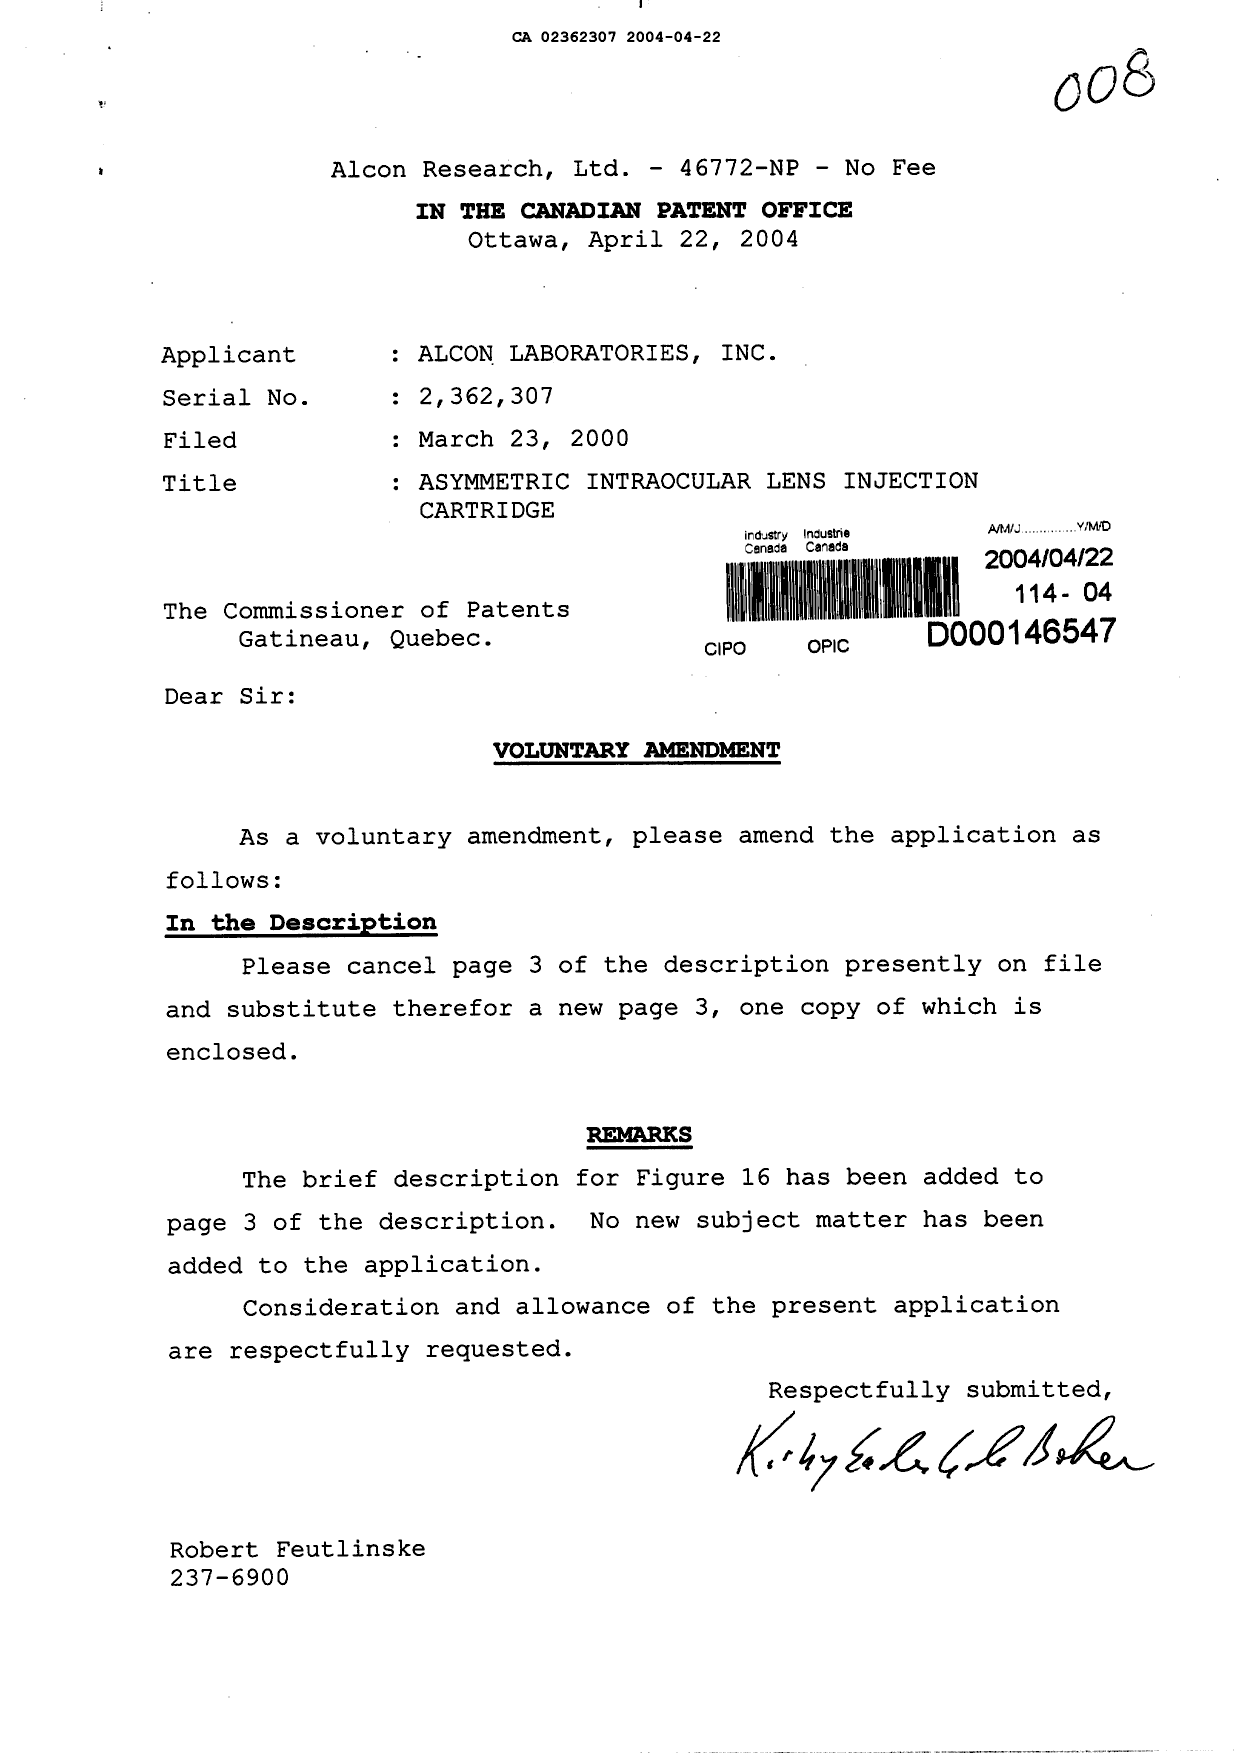 Canadian Patent Document 2362307. Prosecution-Amendment 20031222. Image 1 of 2